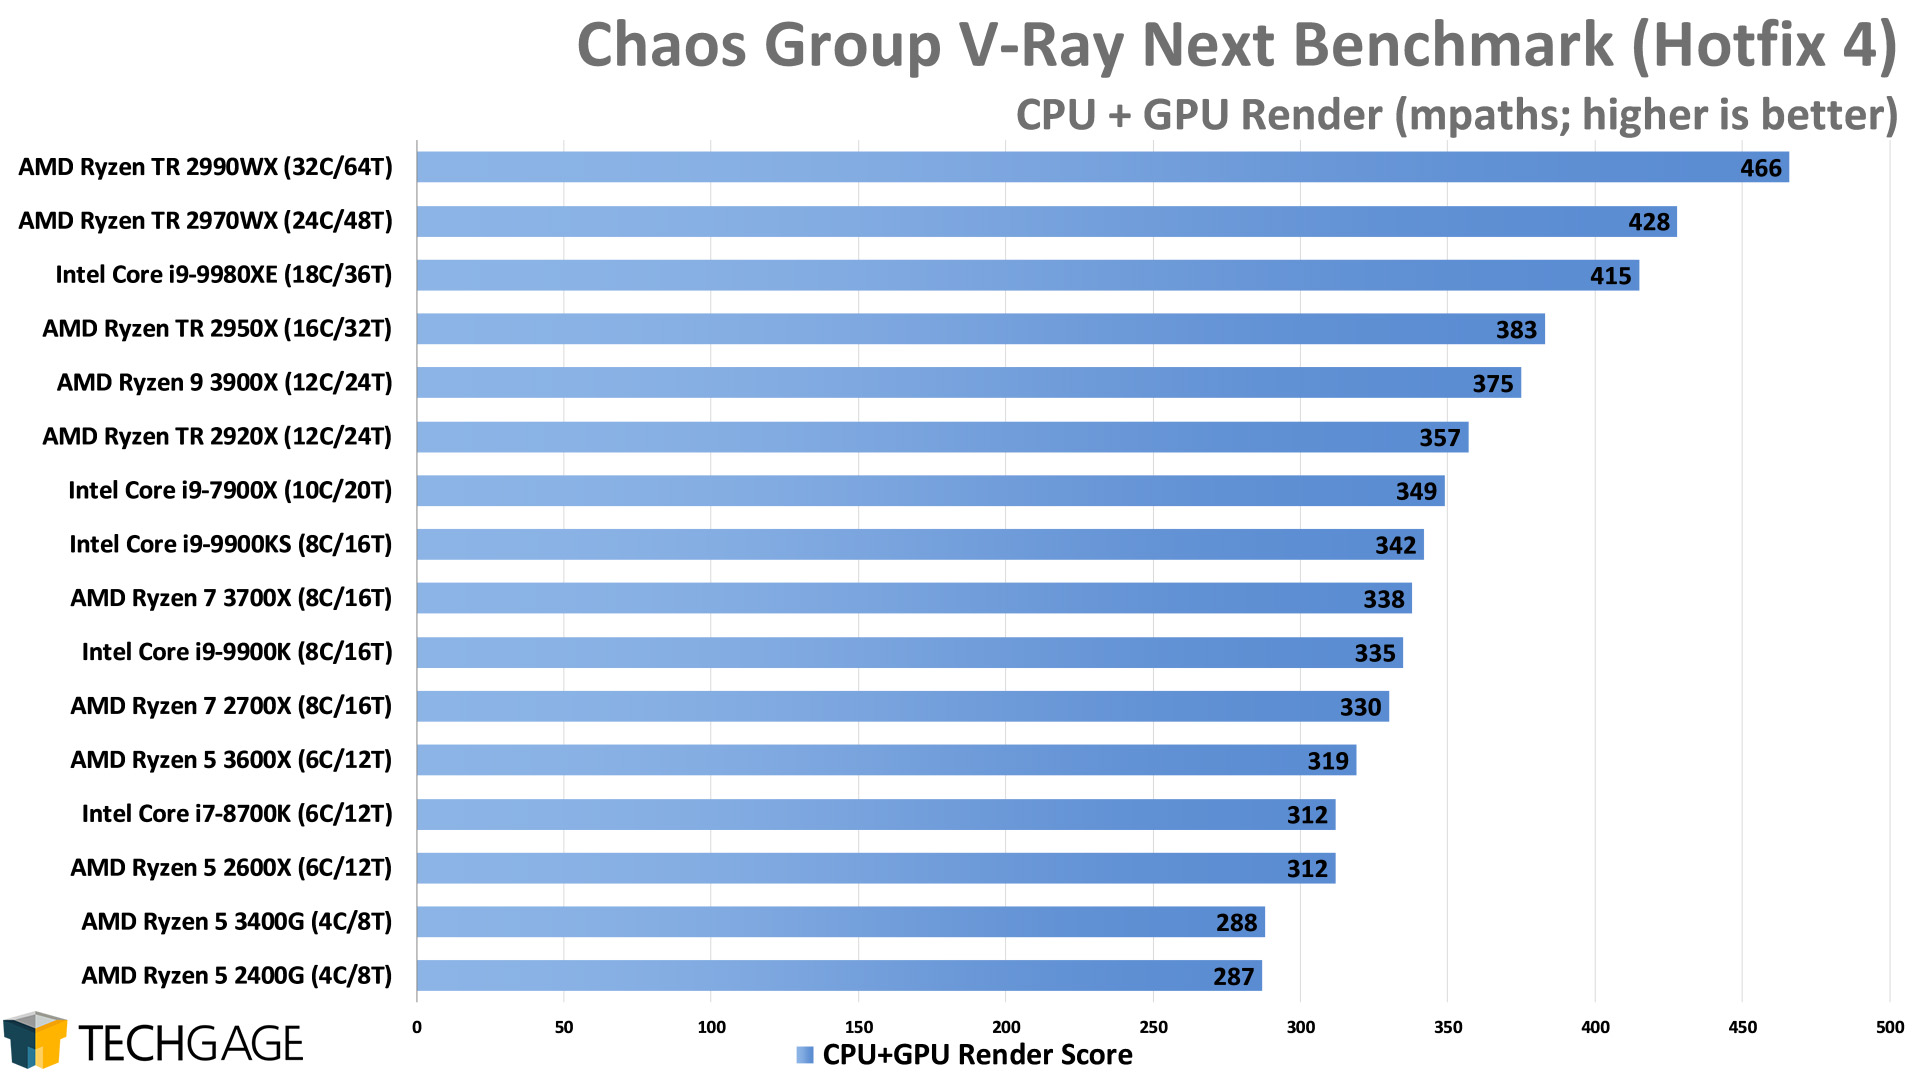 Chaos Group V-Ray Next Benchmark - CPU+GPU Render Score (Intel Core i9-9900KS)